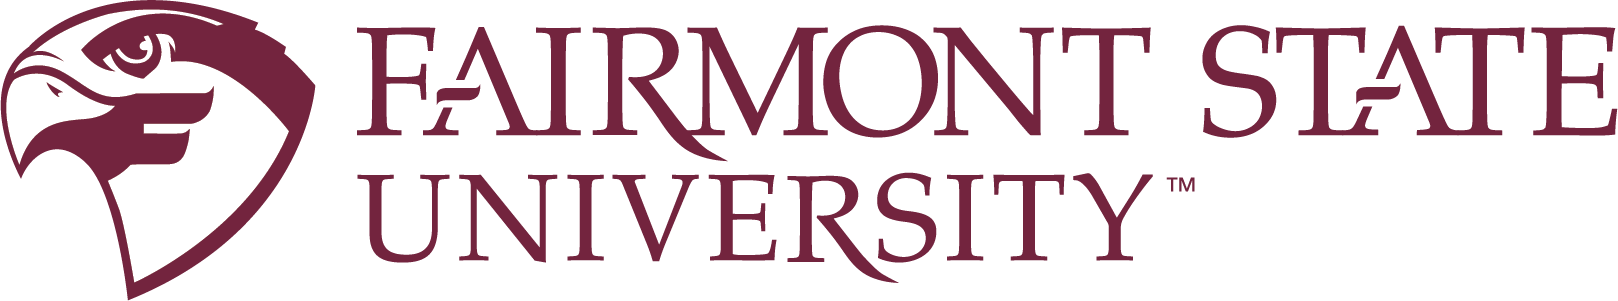 Fairmount Logo - University Brand | About Fairmont State University